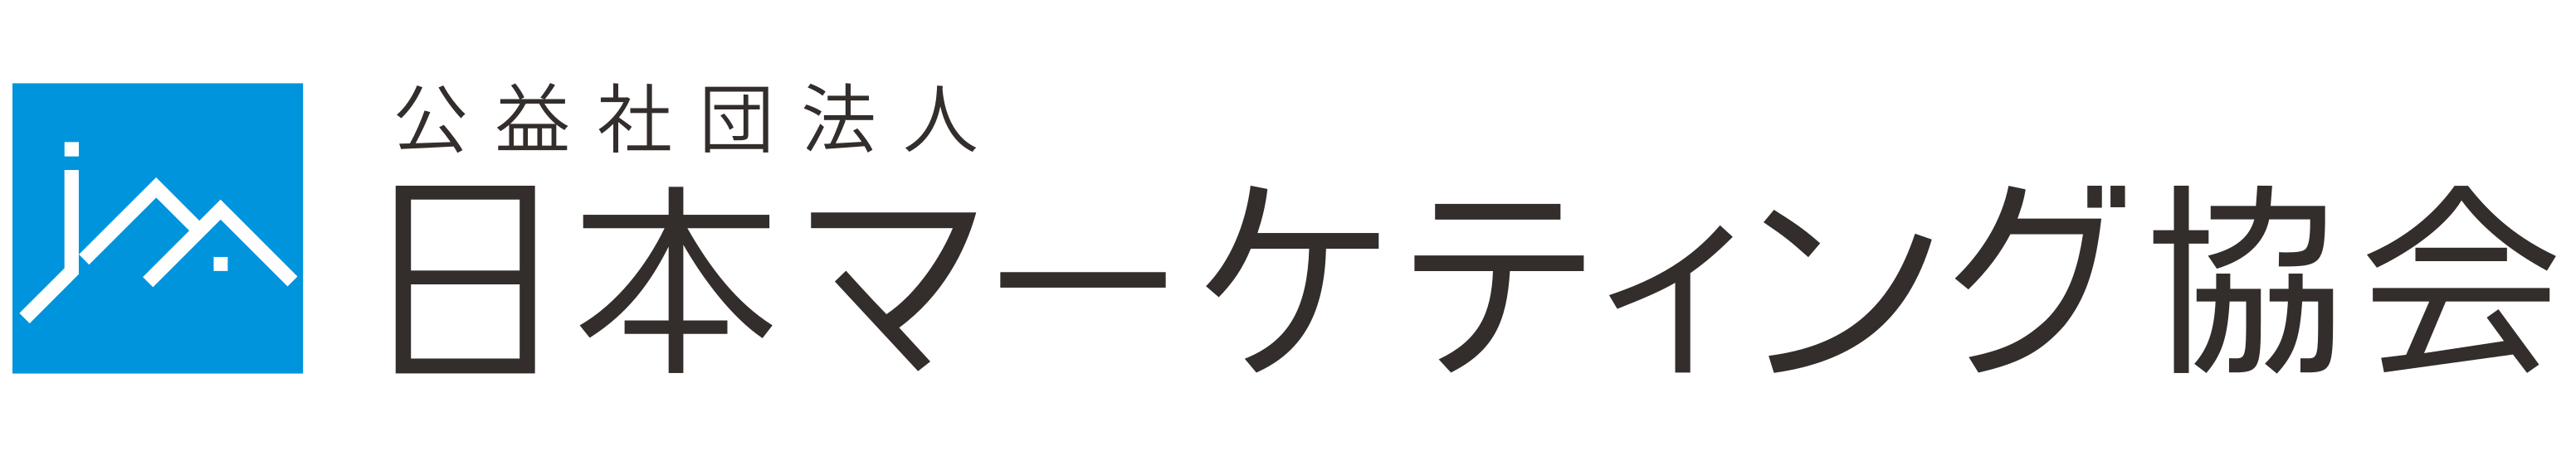 JMA (Japan Marketing Association)